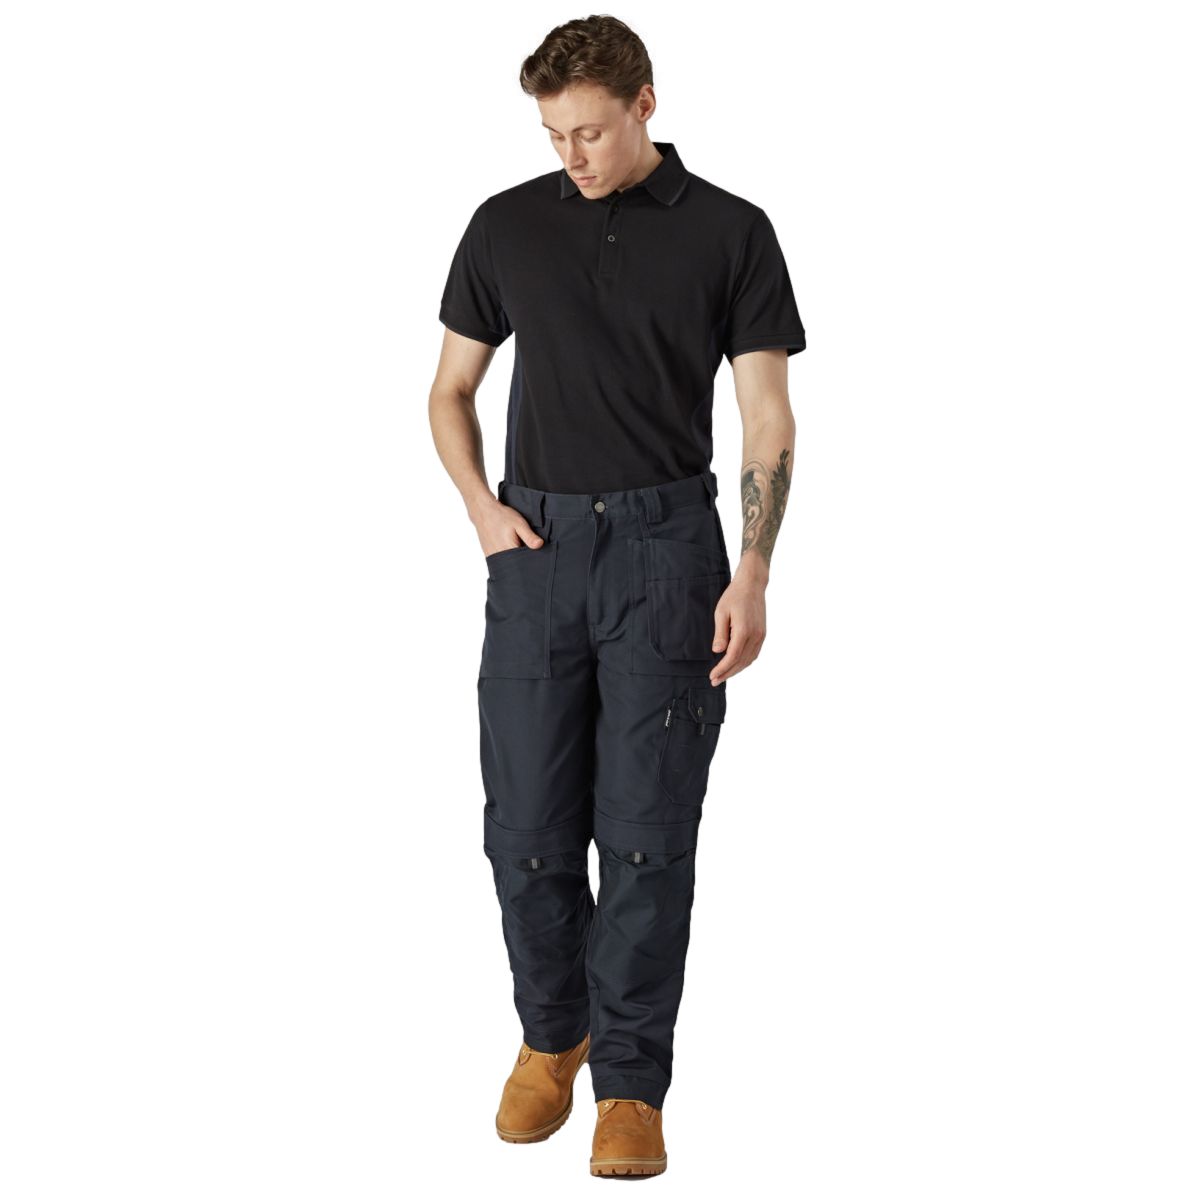 Pantalon Eisenhower multi-poches Bleu marine - Dickies - Taille 48 2